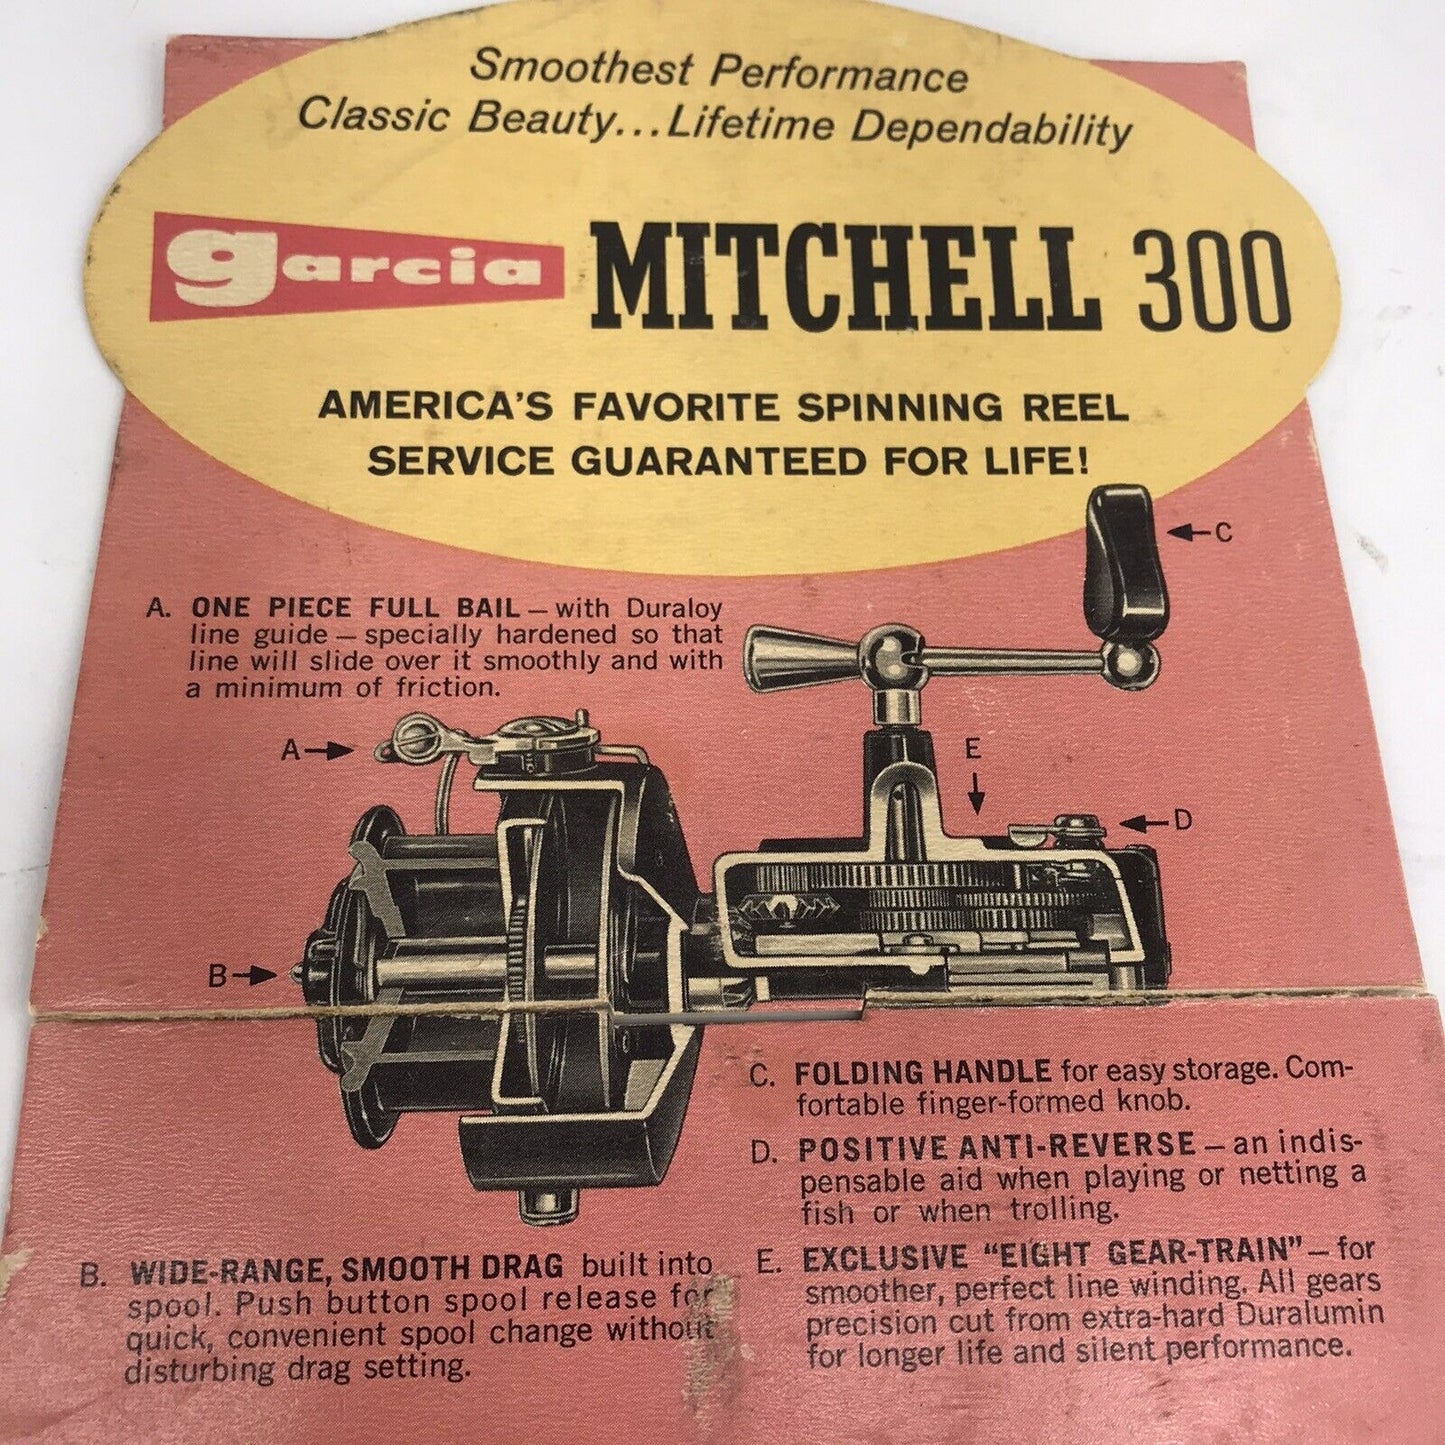 Vintage Garcia Mitchell 300 Reel Cardboard Advertisement Advertising P –  Sunrise Pickers